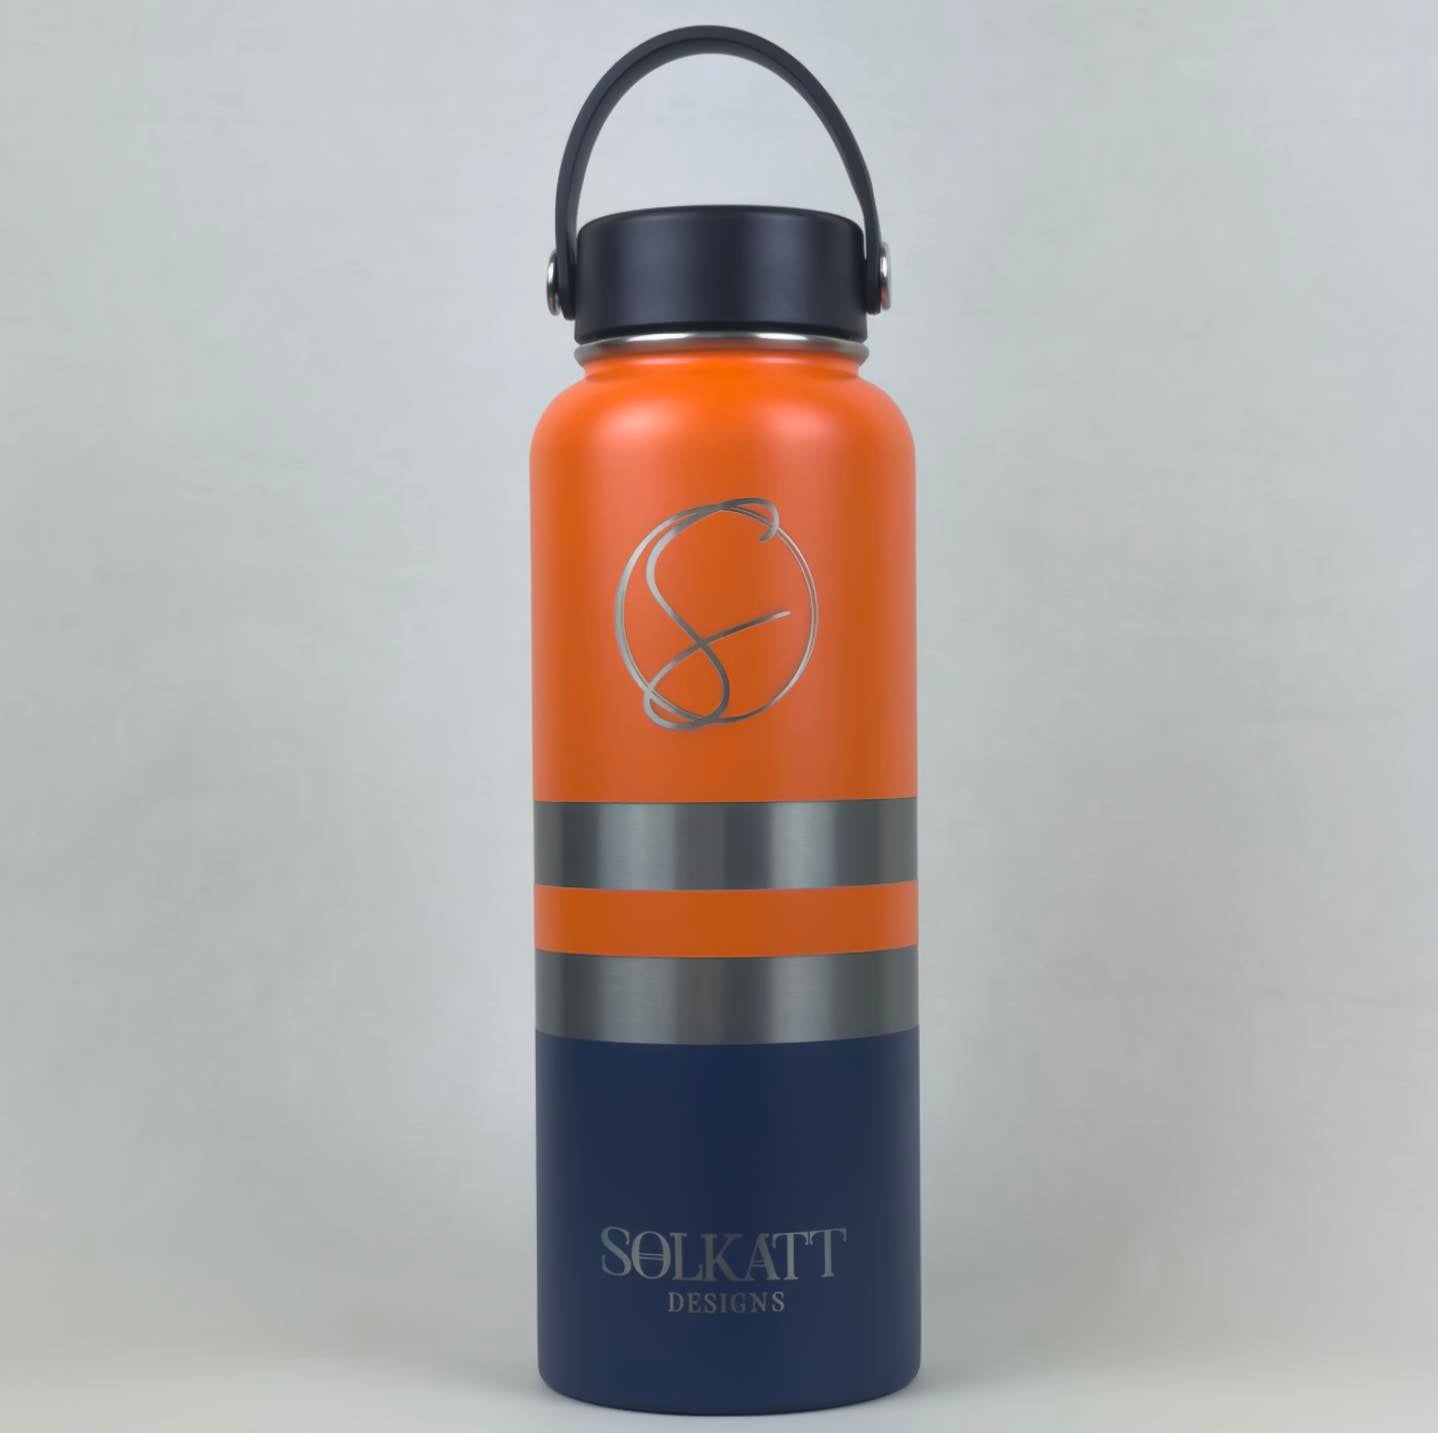 Solkatt Designs Ole Mate Orange Stainless Steel Tradie Water Bottle insulated double walled drink bottle vacuum sealed 1.2L wide mouth lid